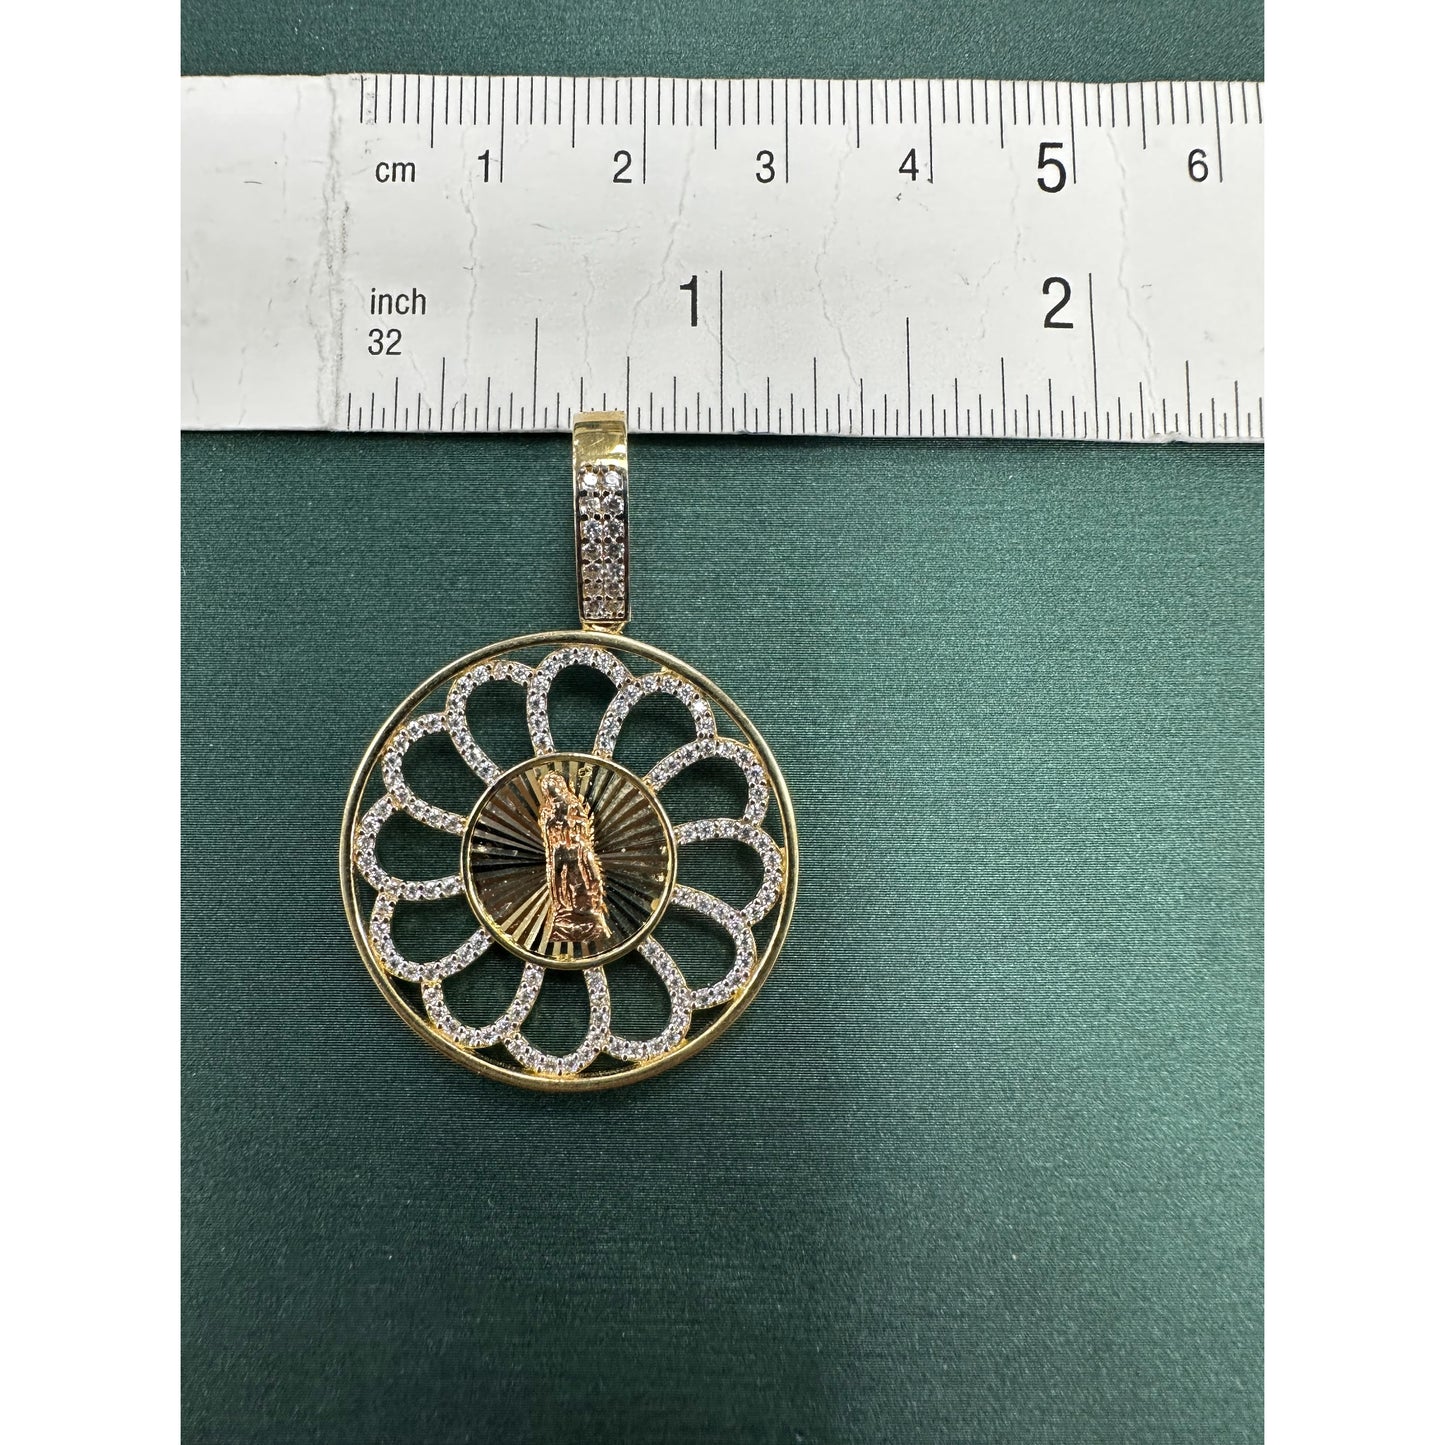 Virgin Guadalupe Spirl flower cz halo pendant